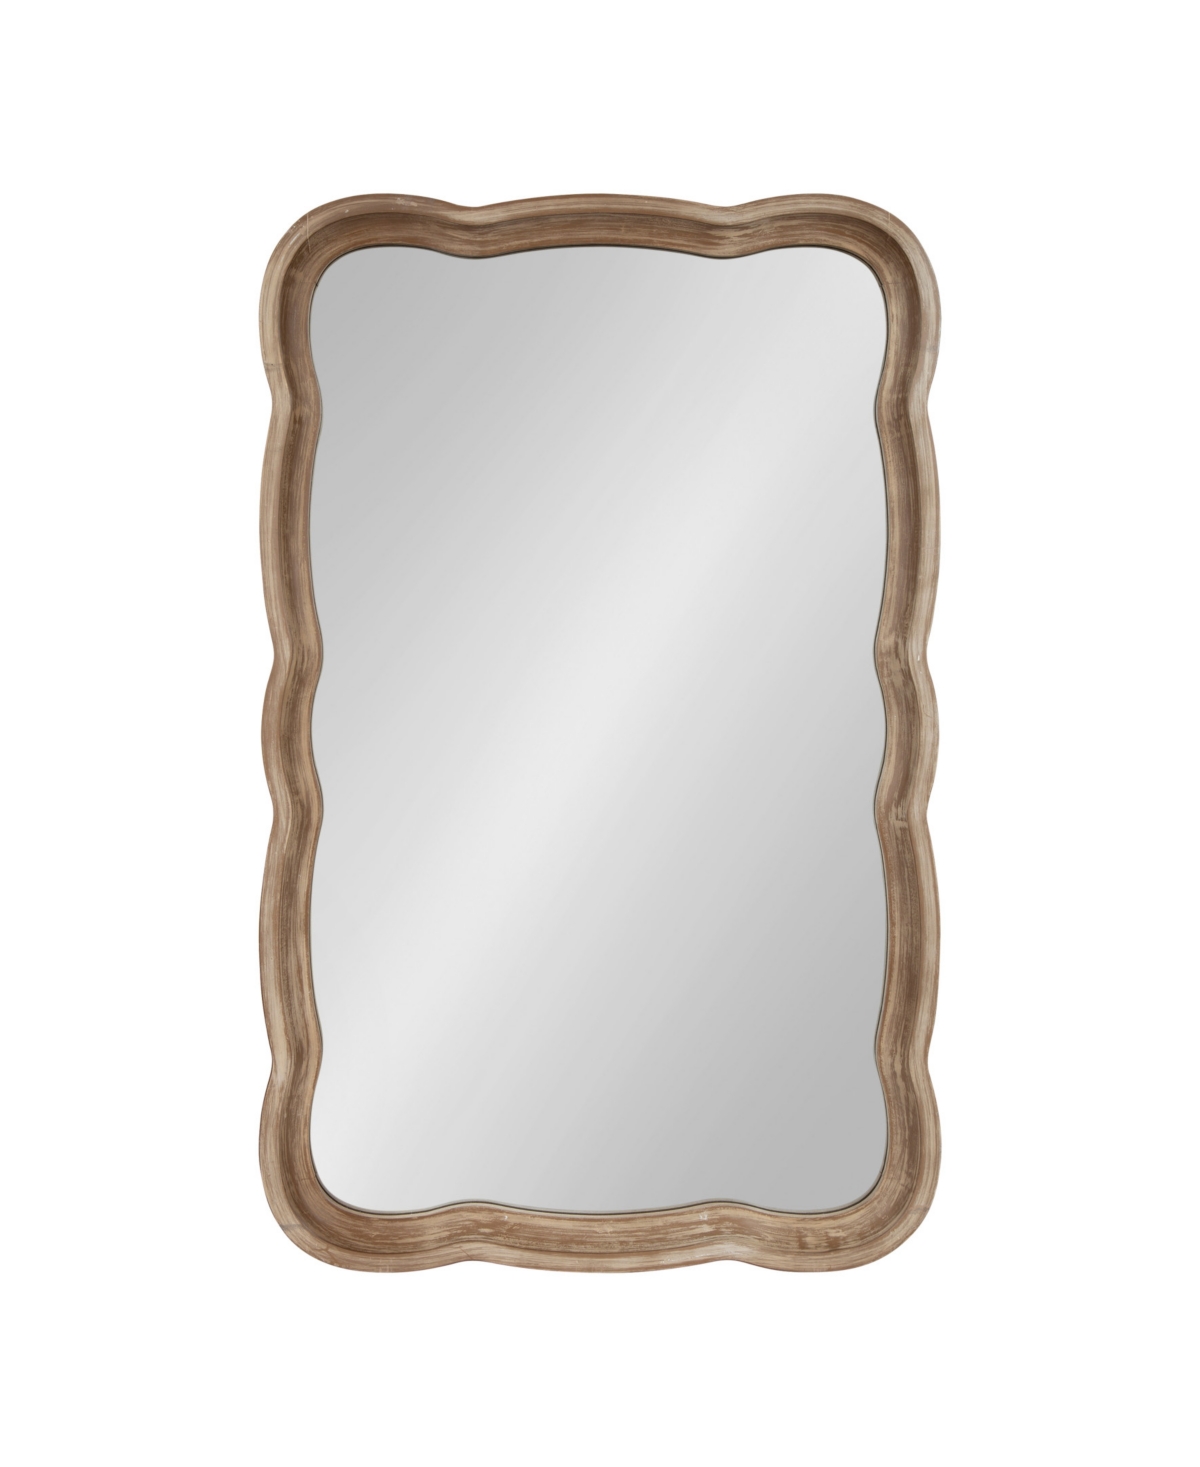 Hatherleigh Scallop Wood Wall Mirror - Medium Bro